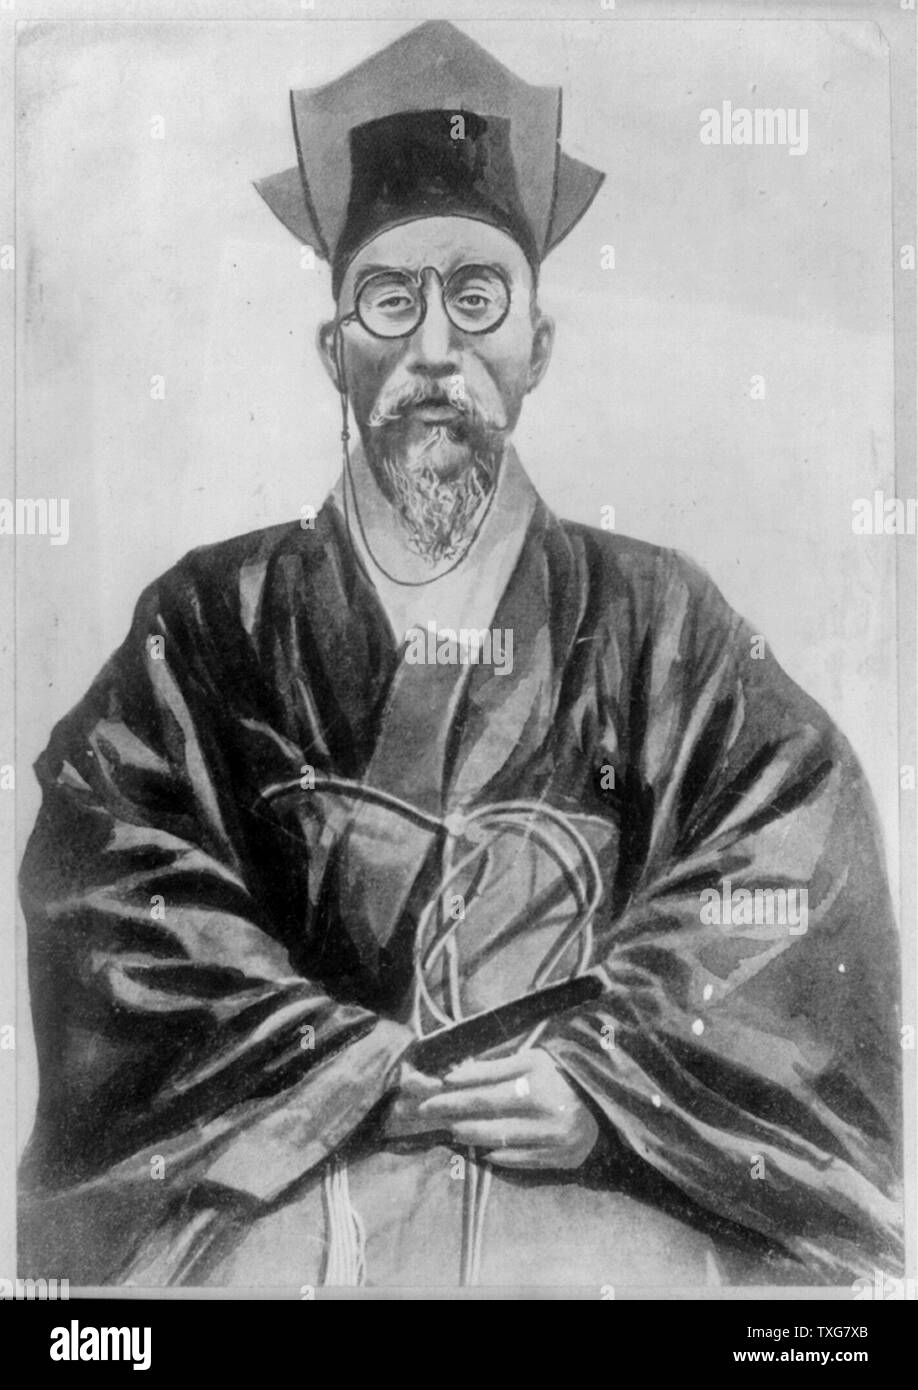 Kojong, Emperor of Korea, wearing spectacles (glasses), seated Stock Photo